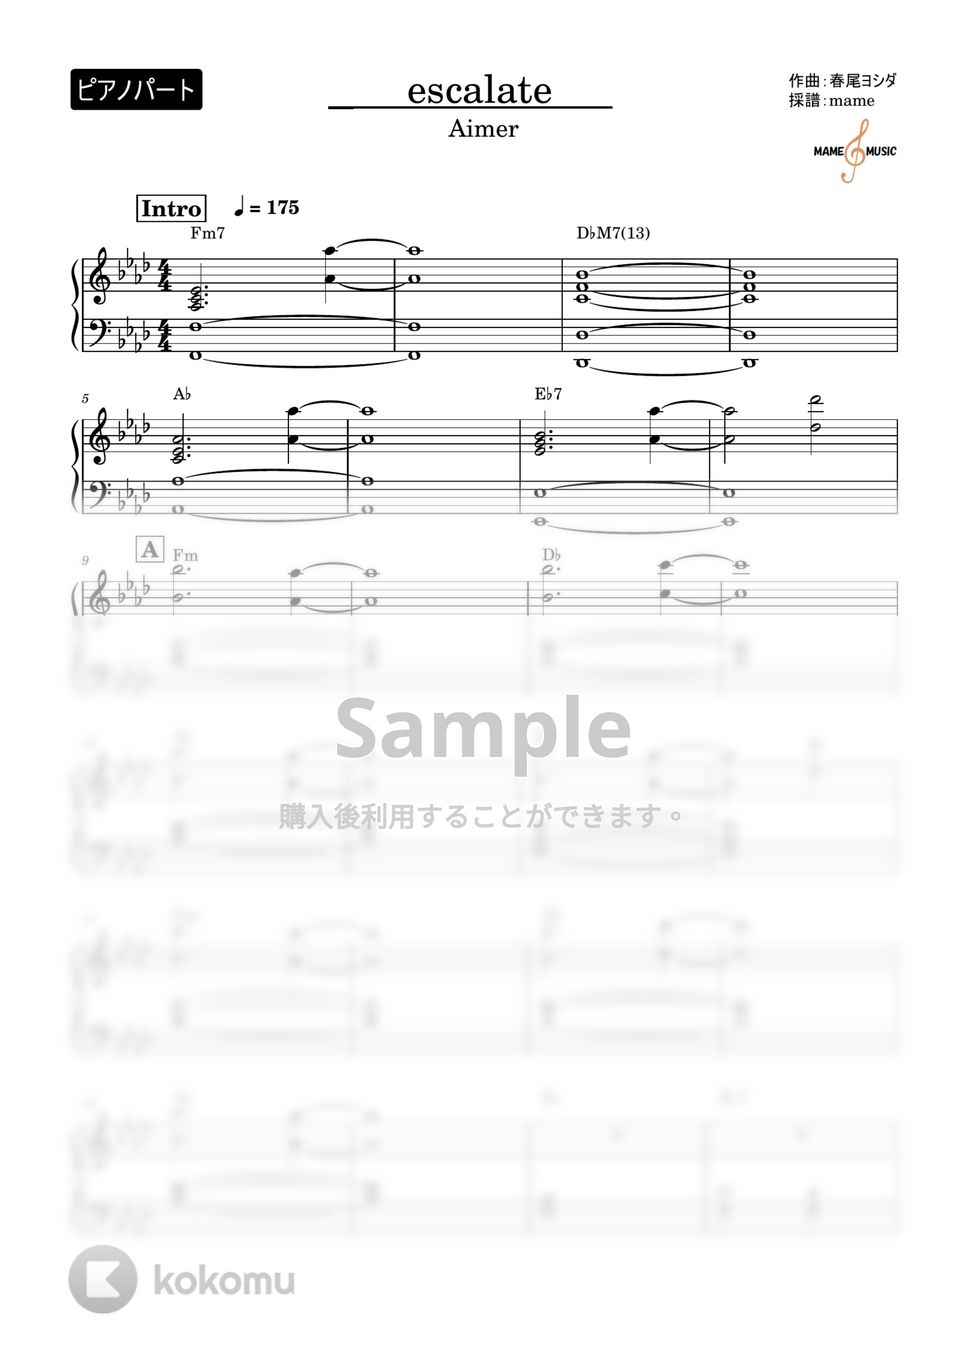 Aimer - escalate (ピアノパート) by mame